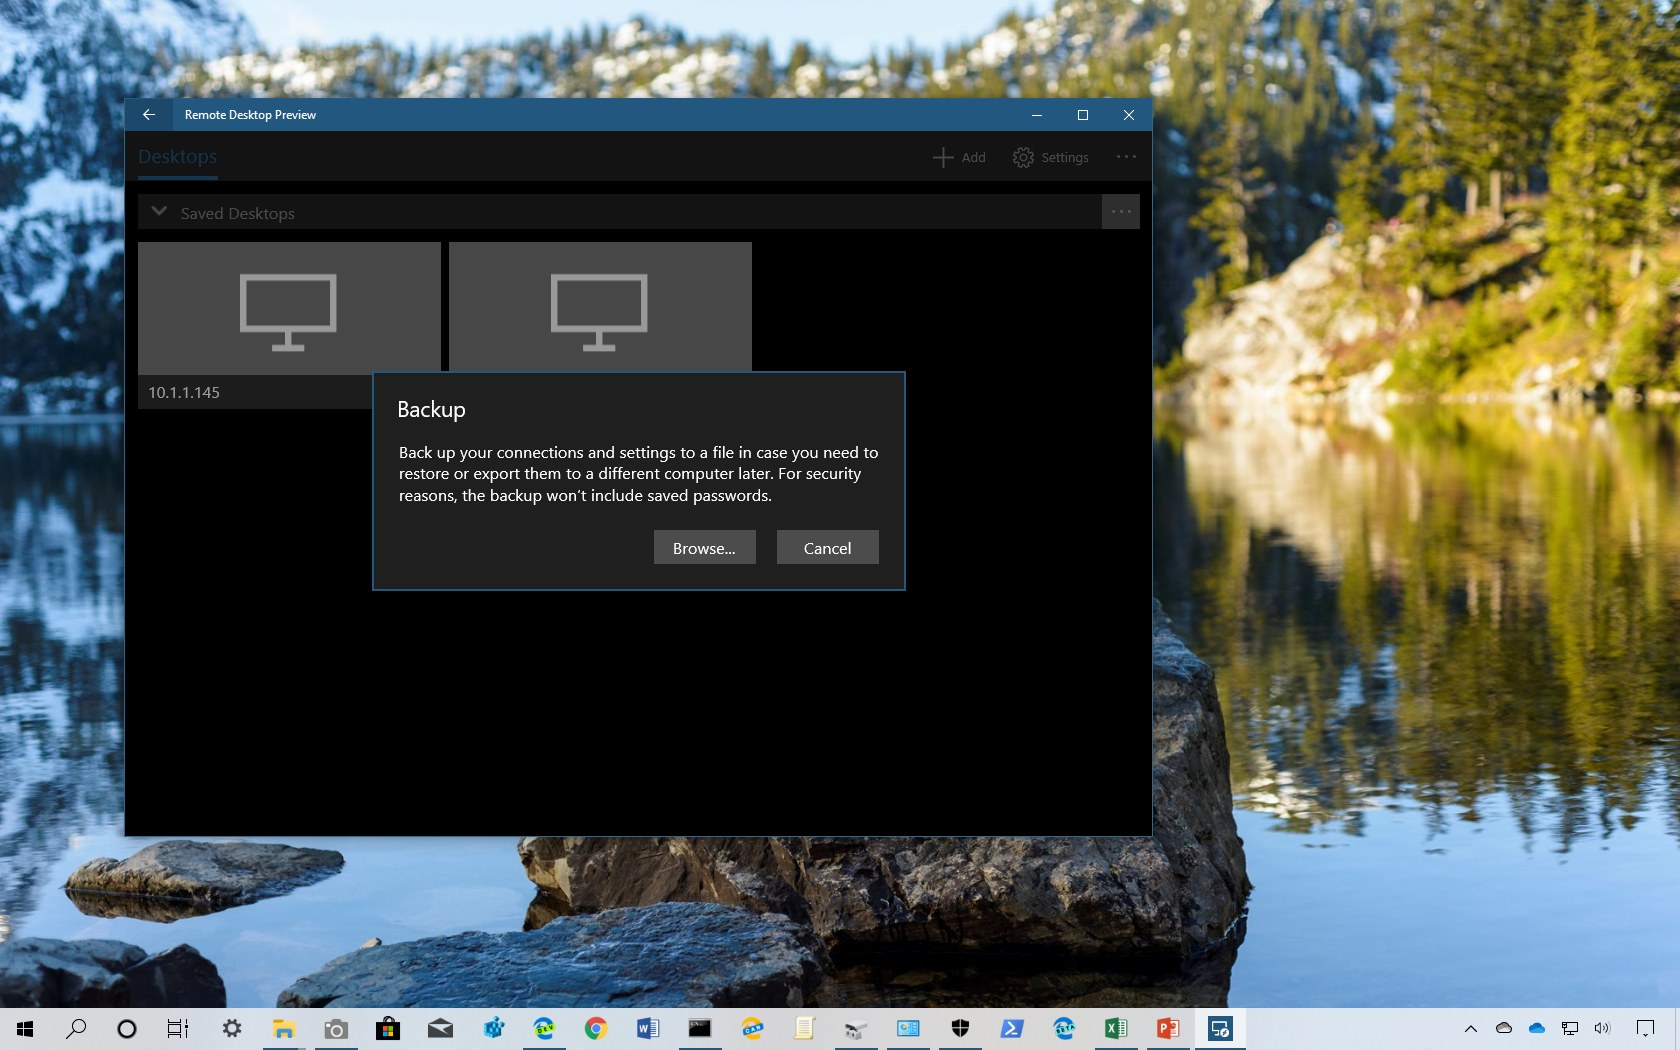 microsoft remote desktop for windows 10 download